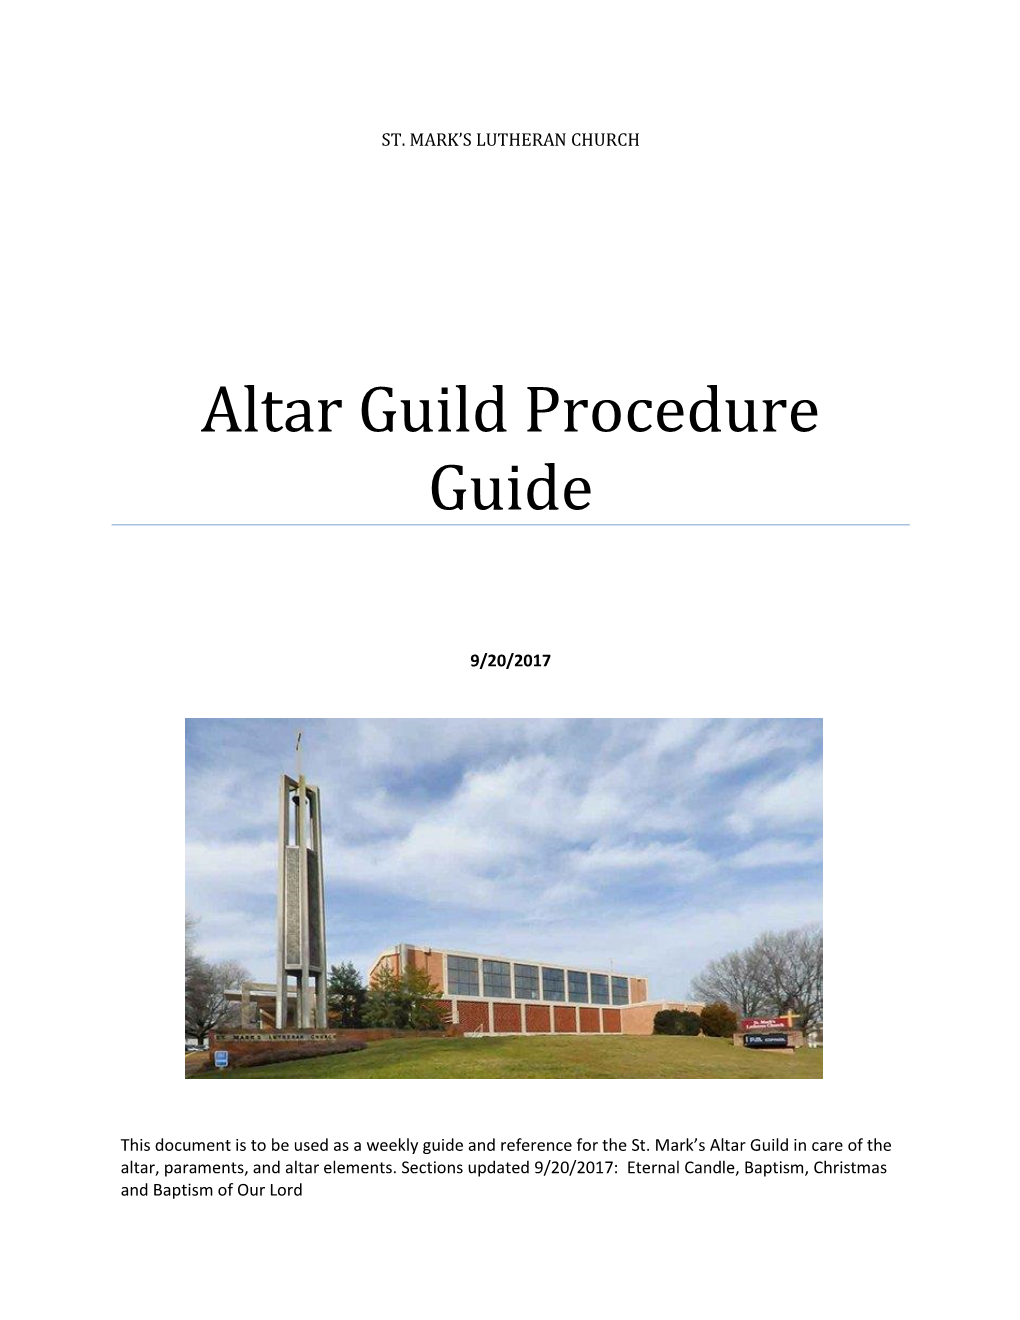 Altar Guild Procedure Guide